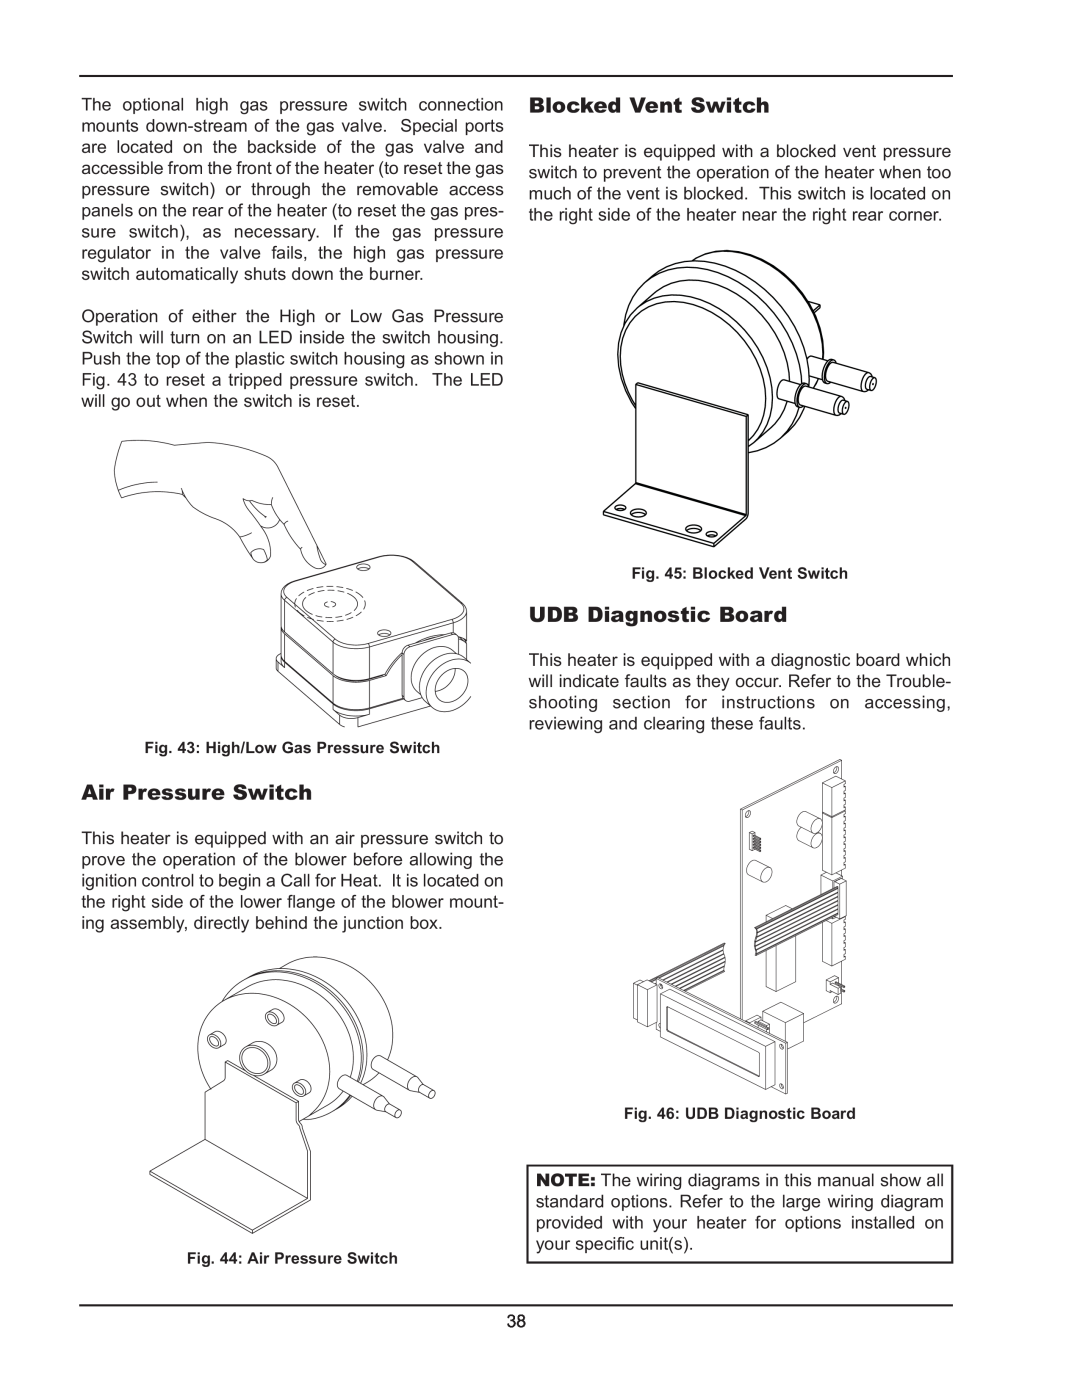 Raypak 503-2003 manual Air Pressure Switch, Blocked Vent Switch, UDB Diagnostic Board 